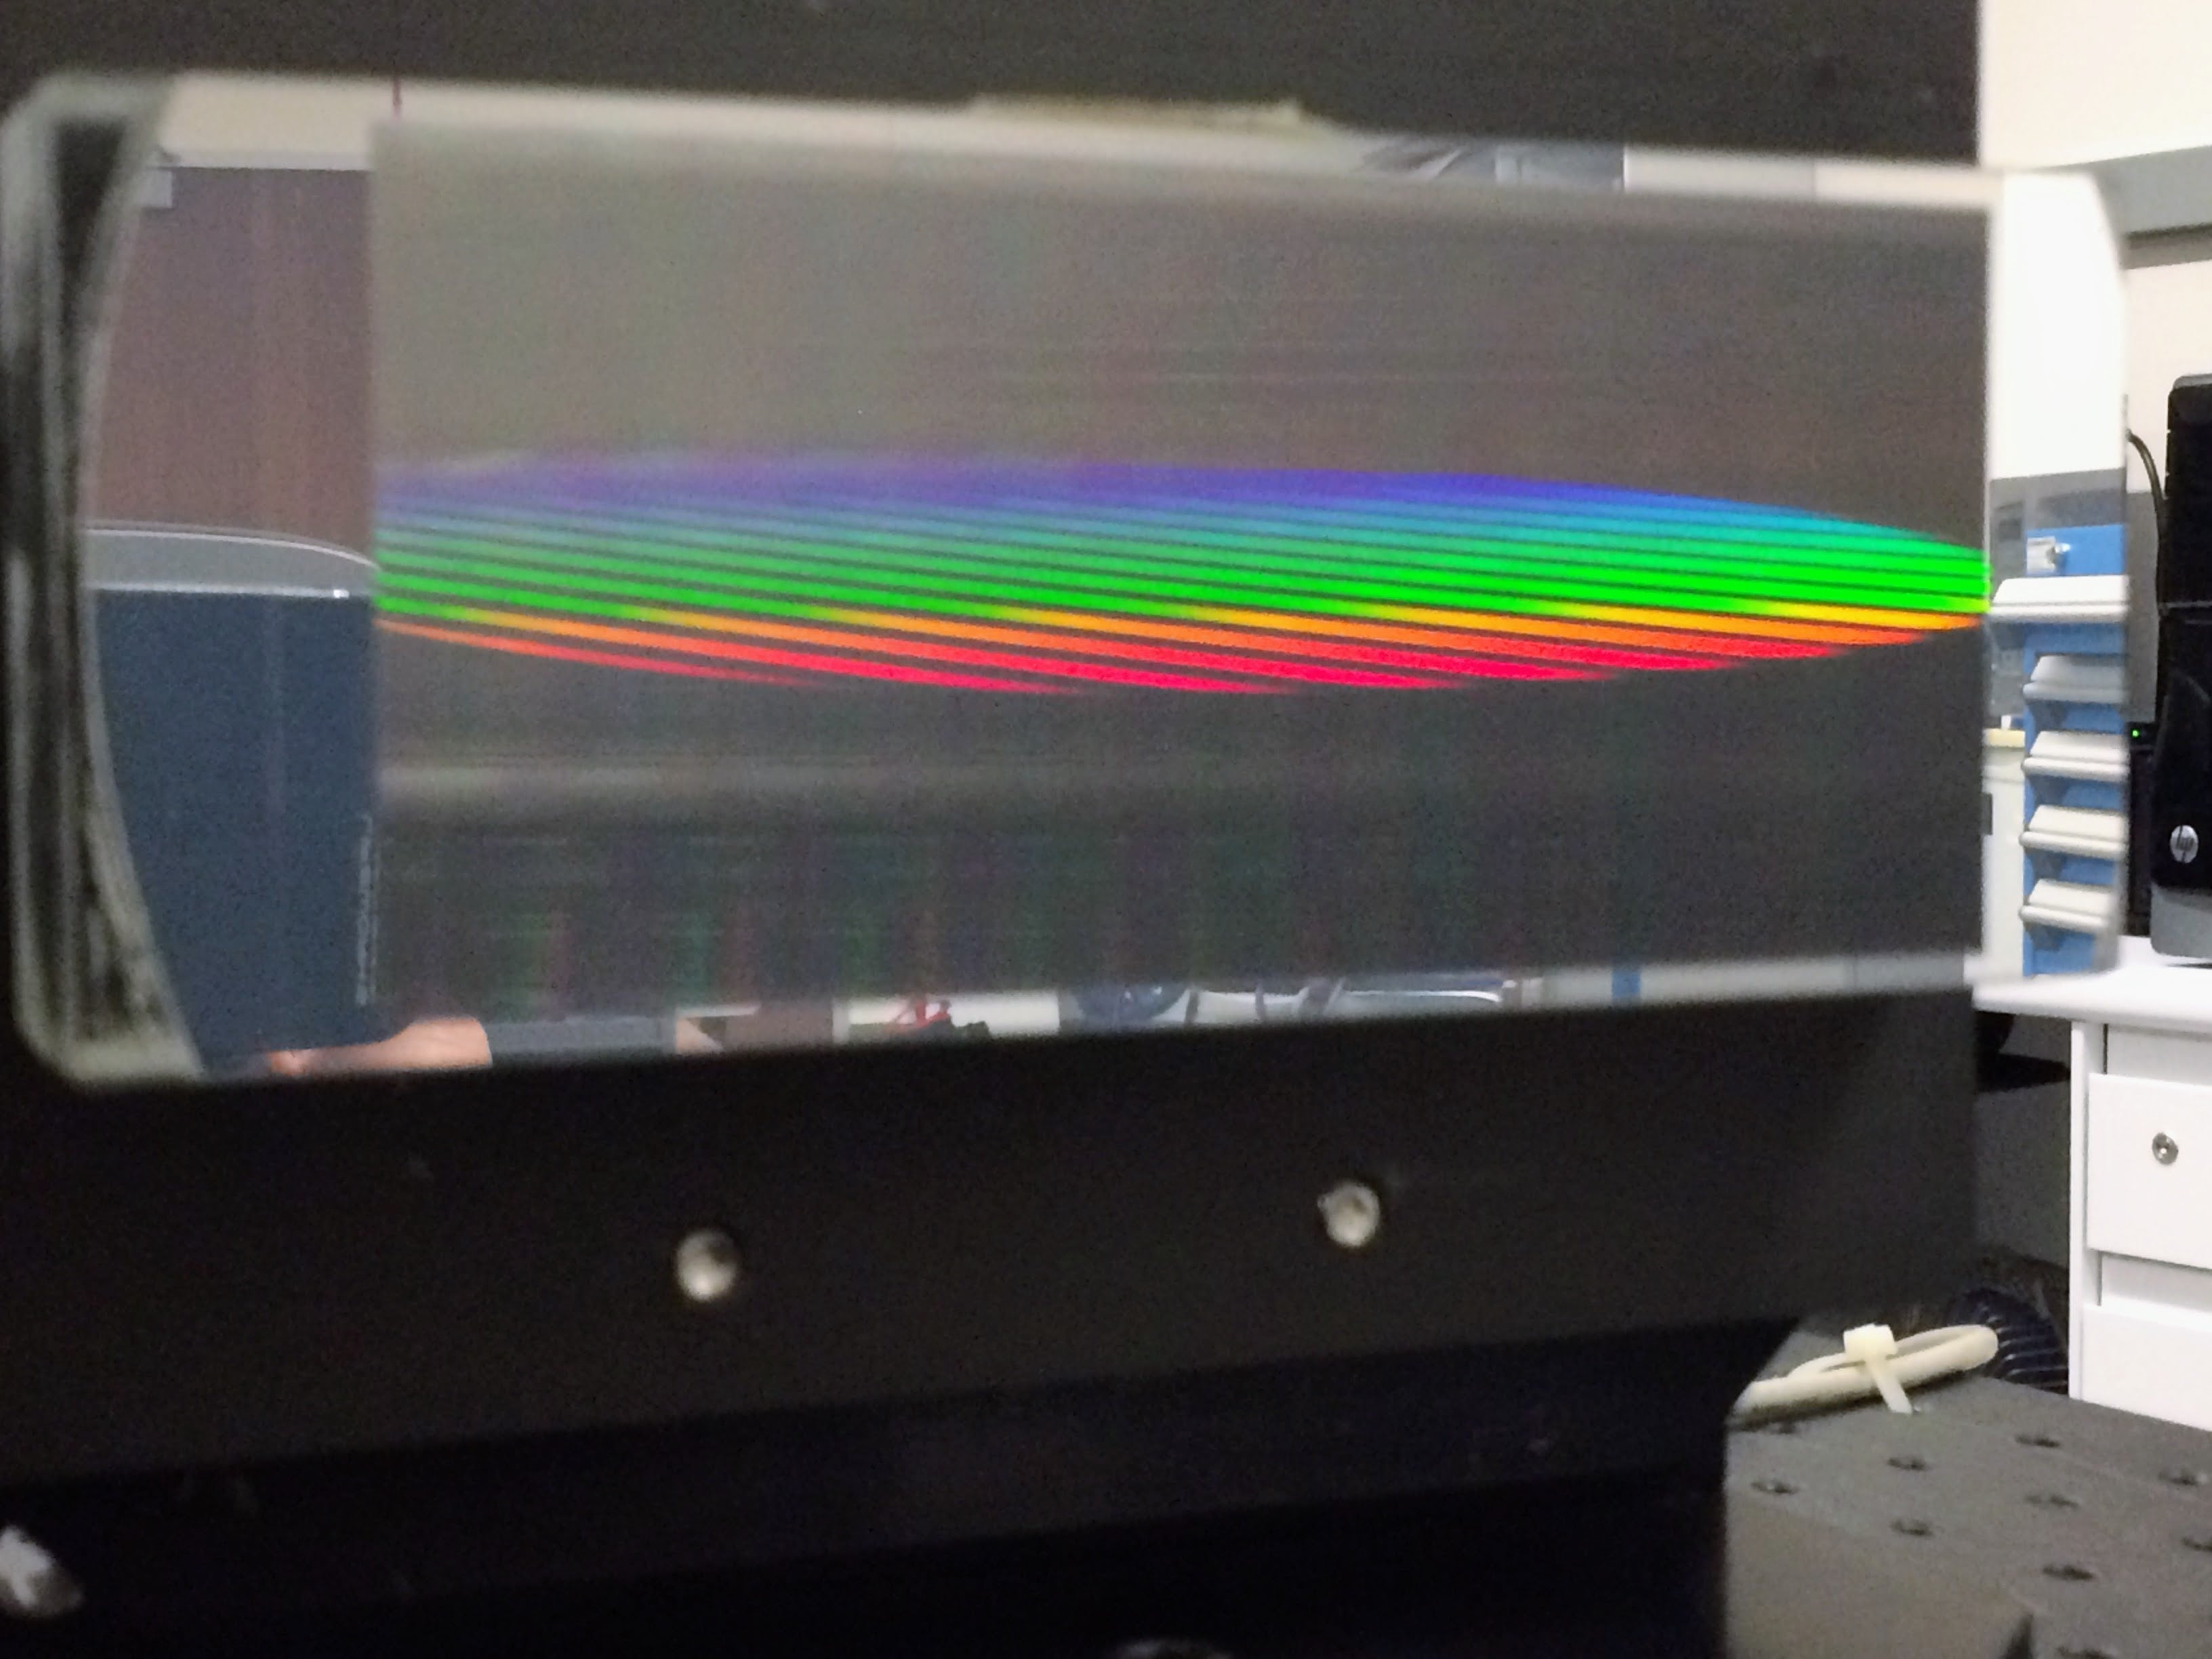 Spectrometer Wavelength Calibration: Practice